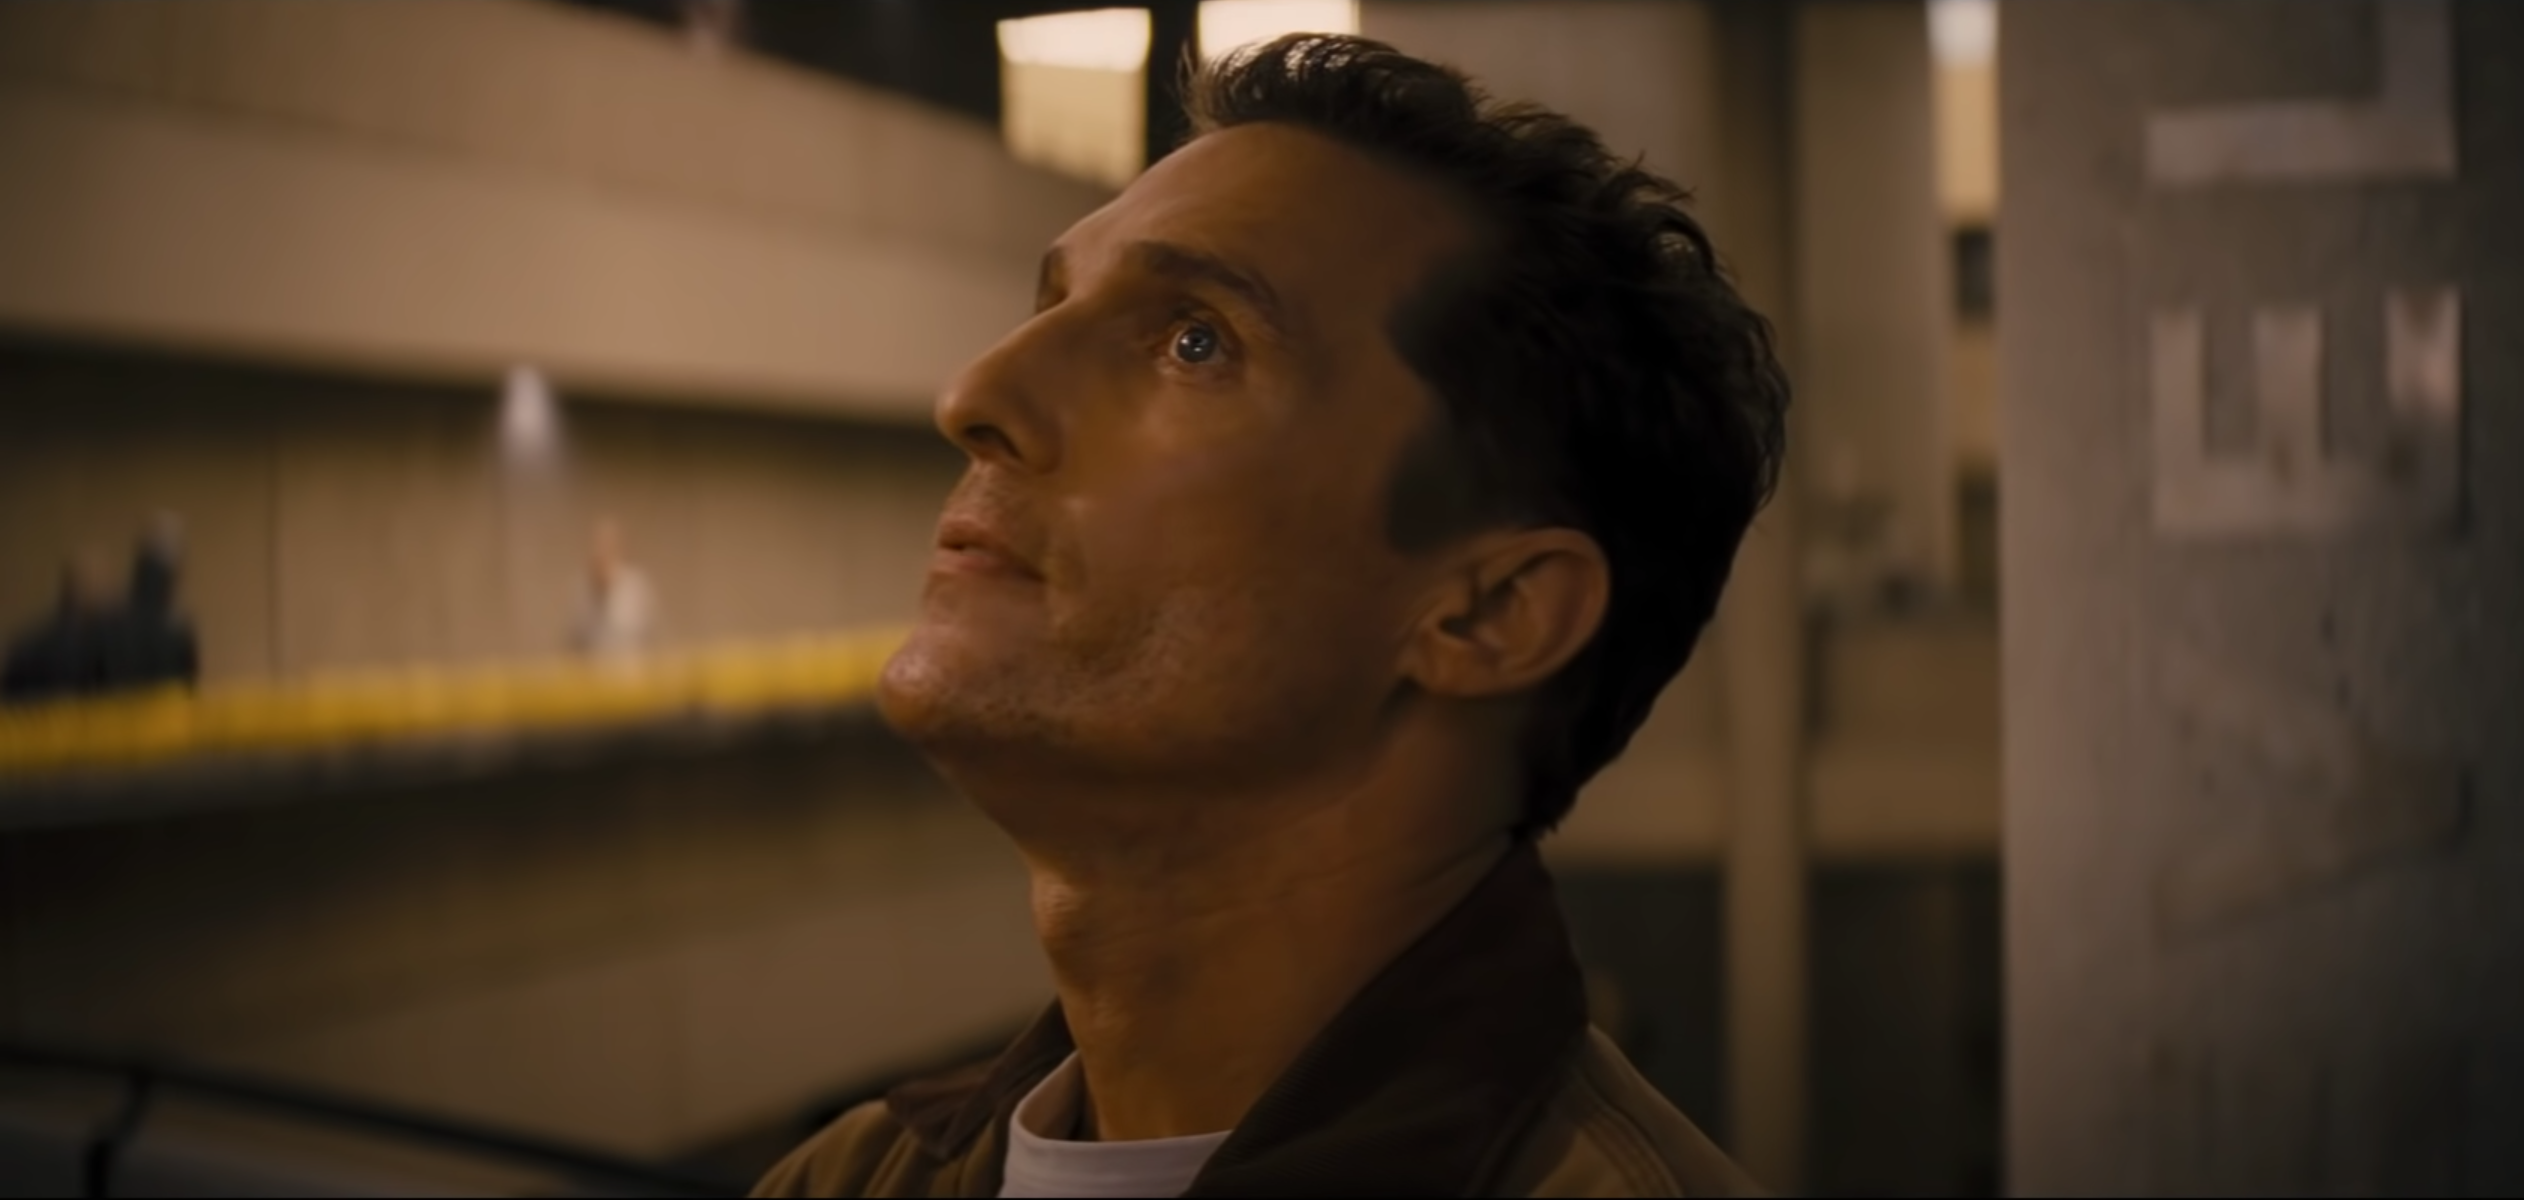 Joseph Cooper (Matthew McConaughey) - Interstellar